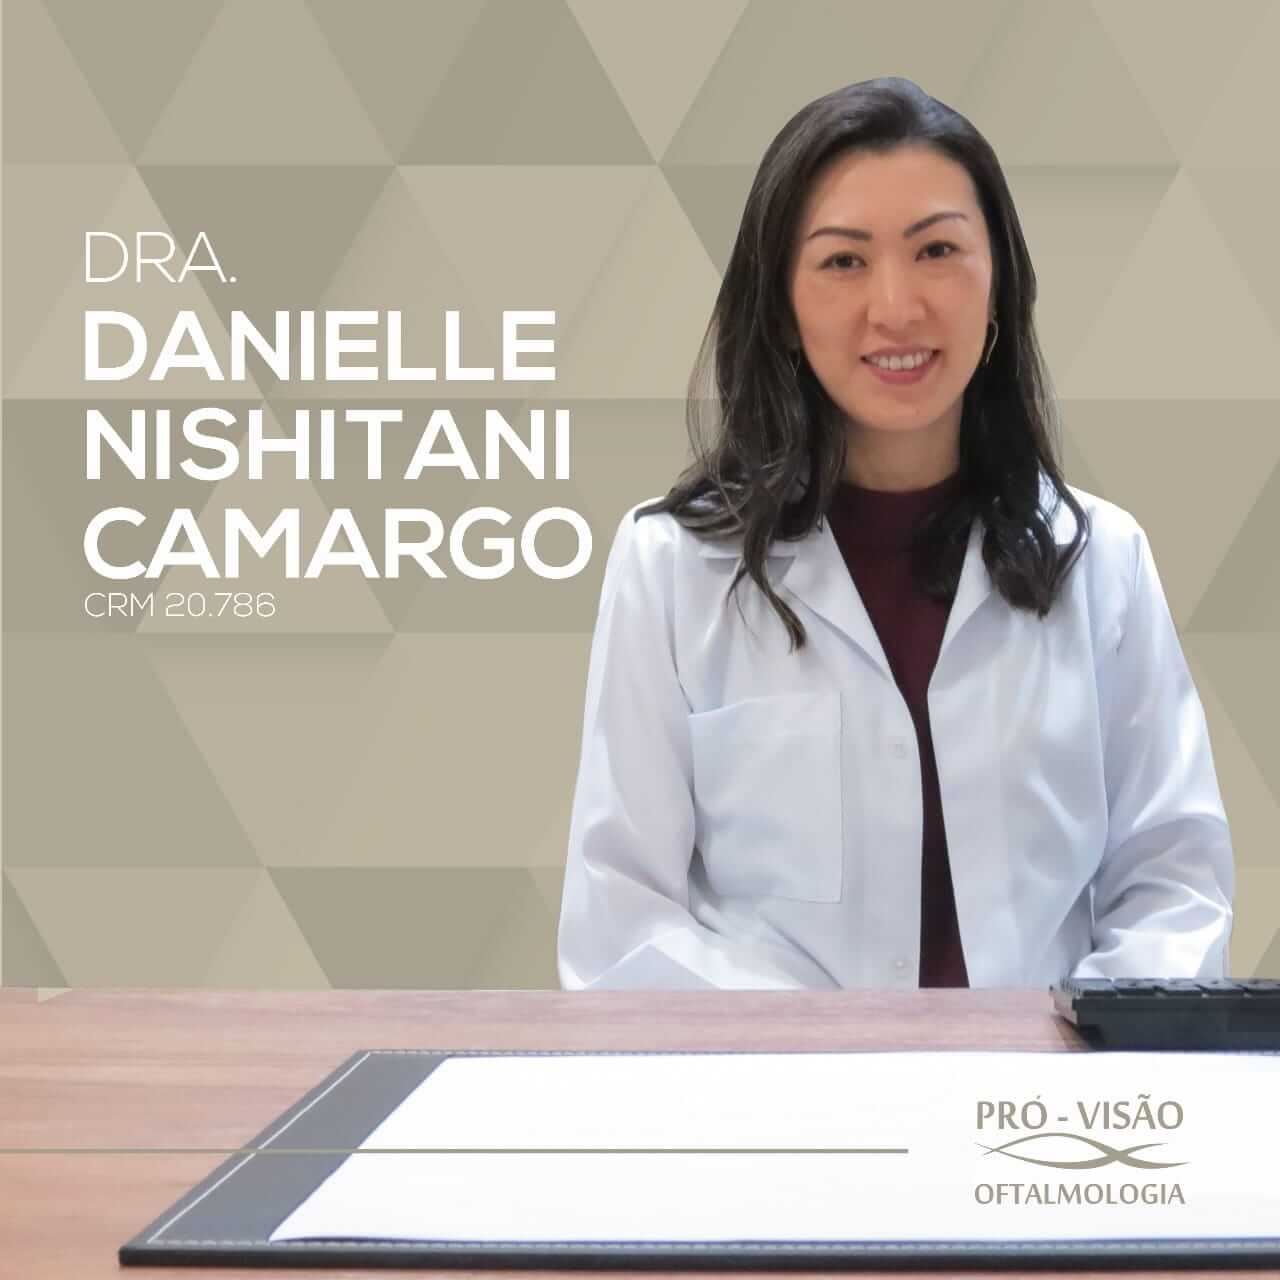 Dra. Danielle Nishitani Camargo